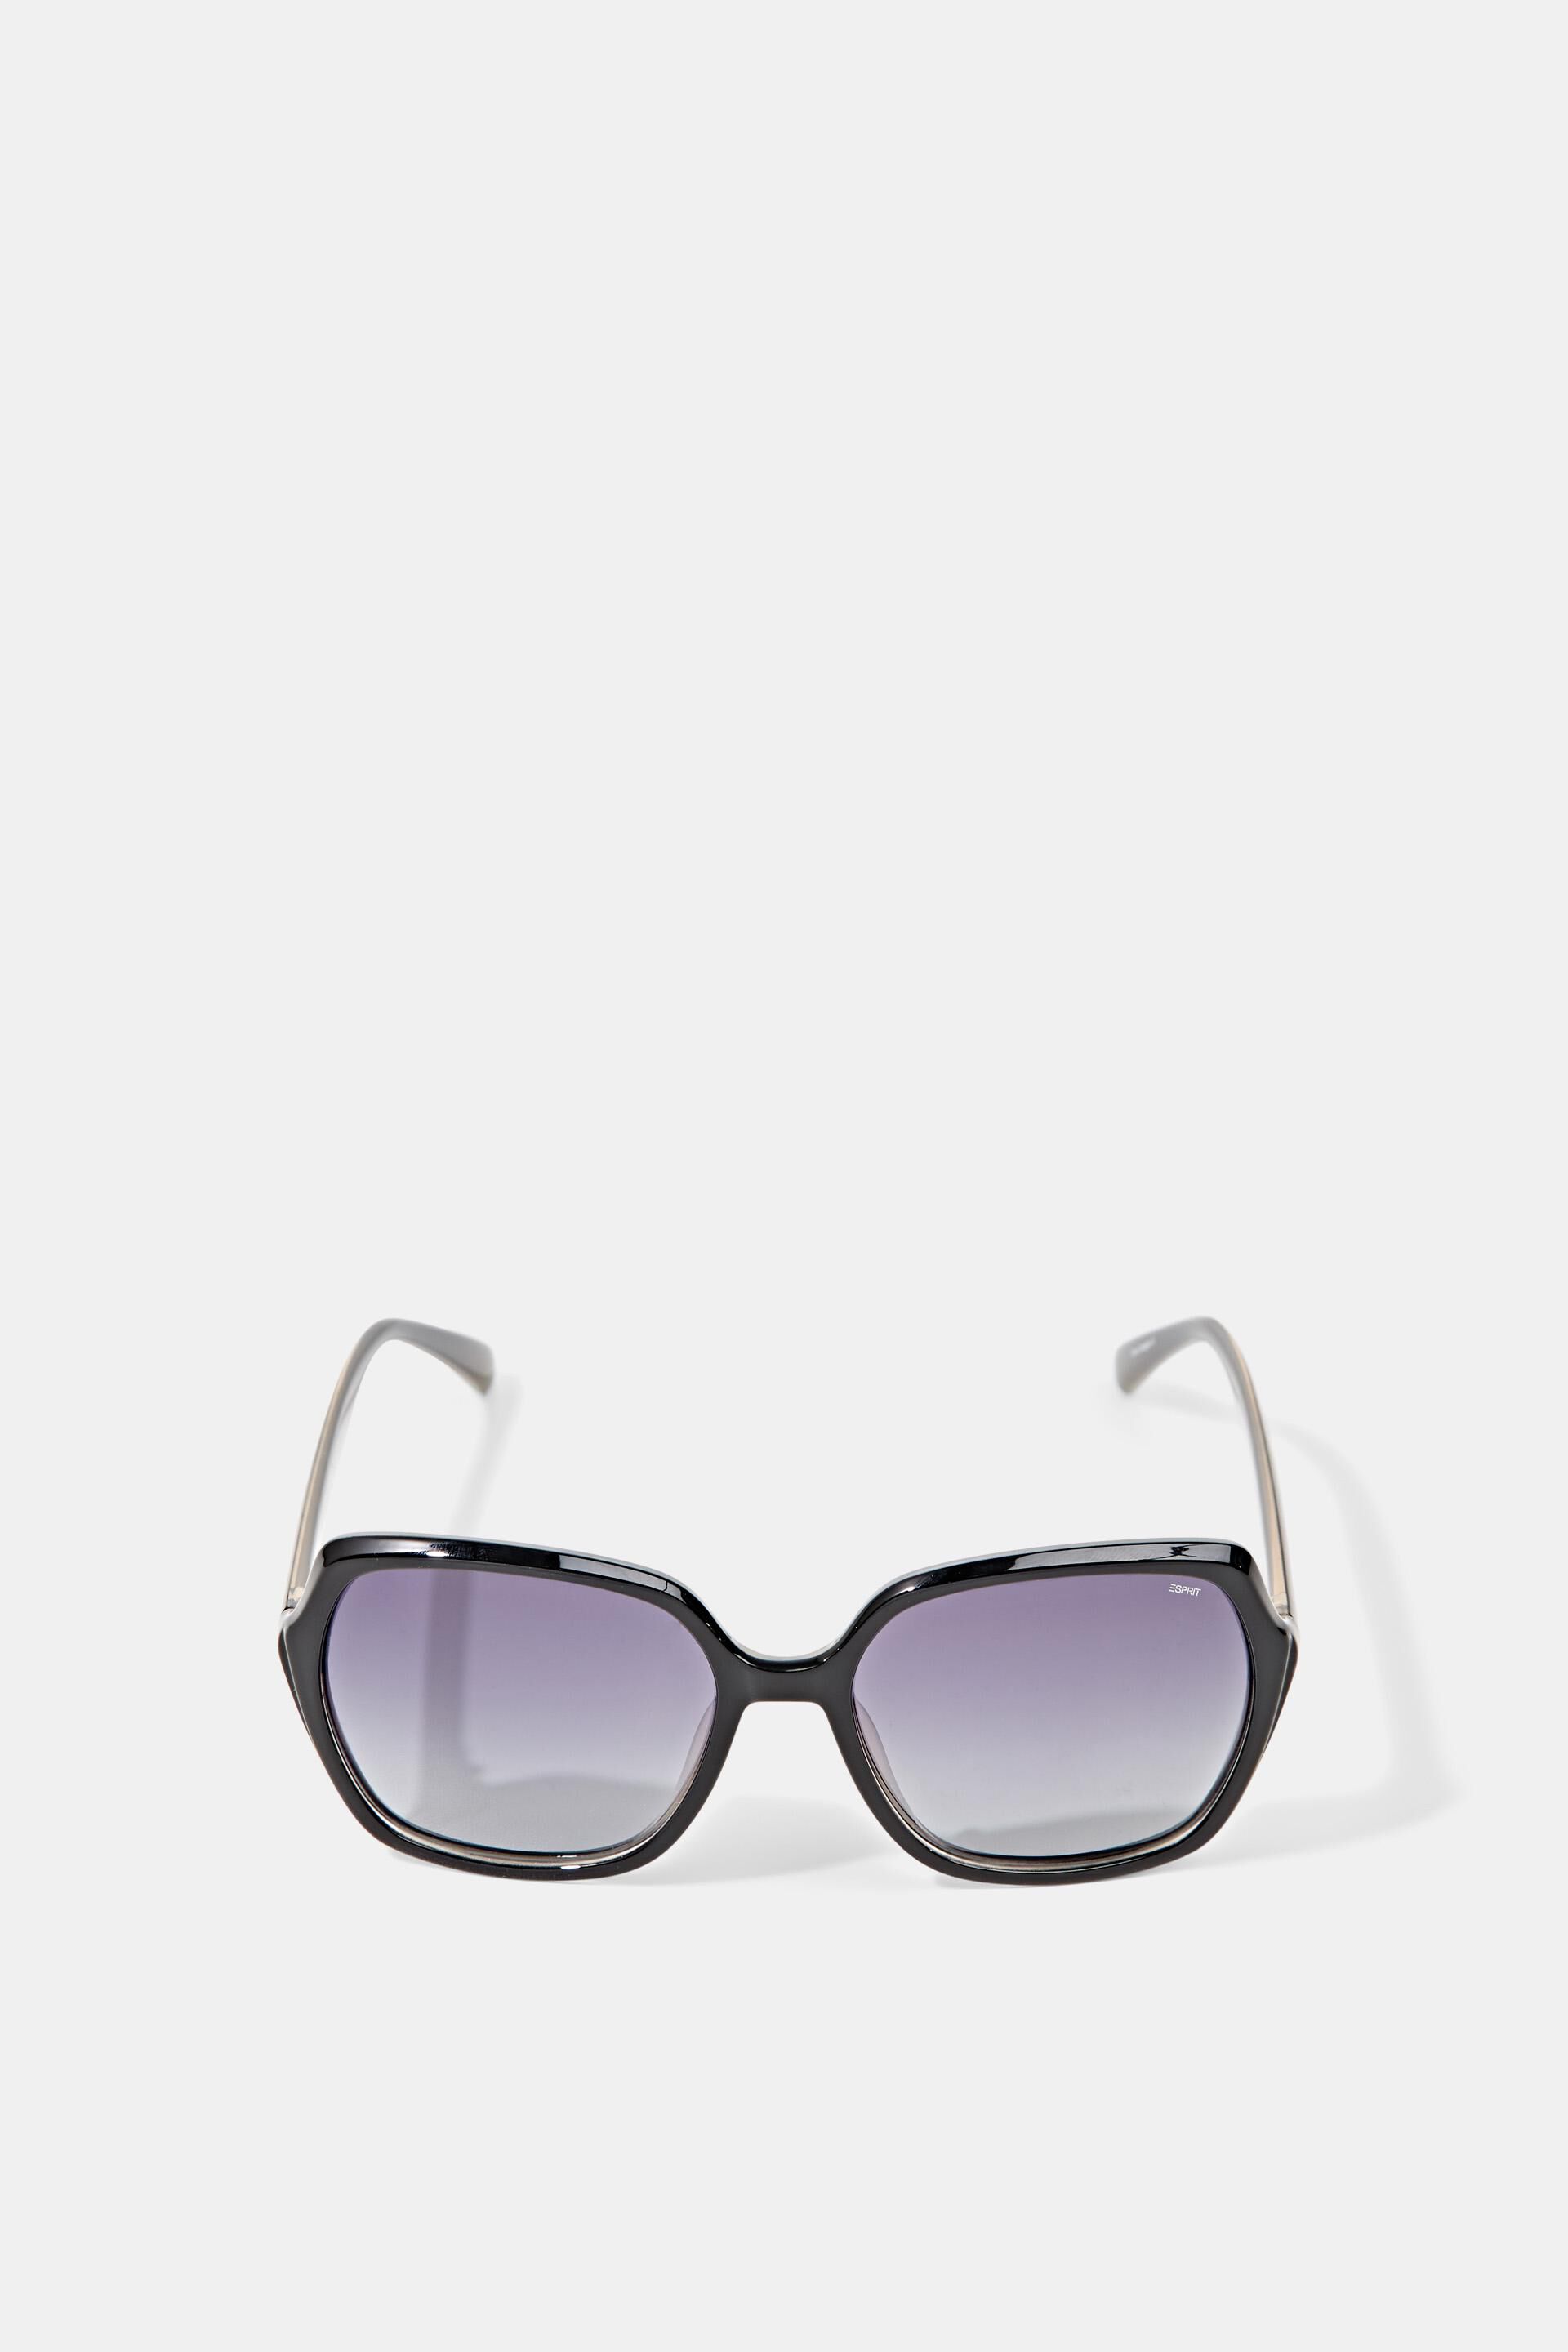 Esprit with sunglasses Statement large lenses